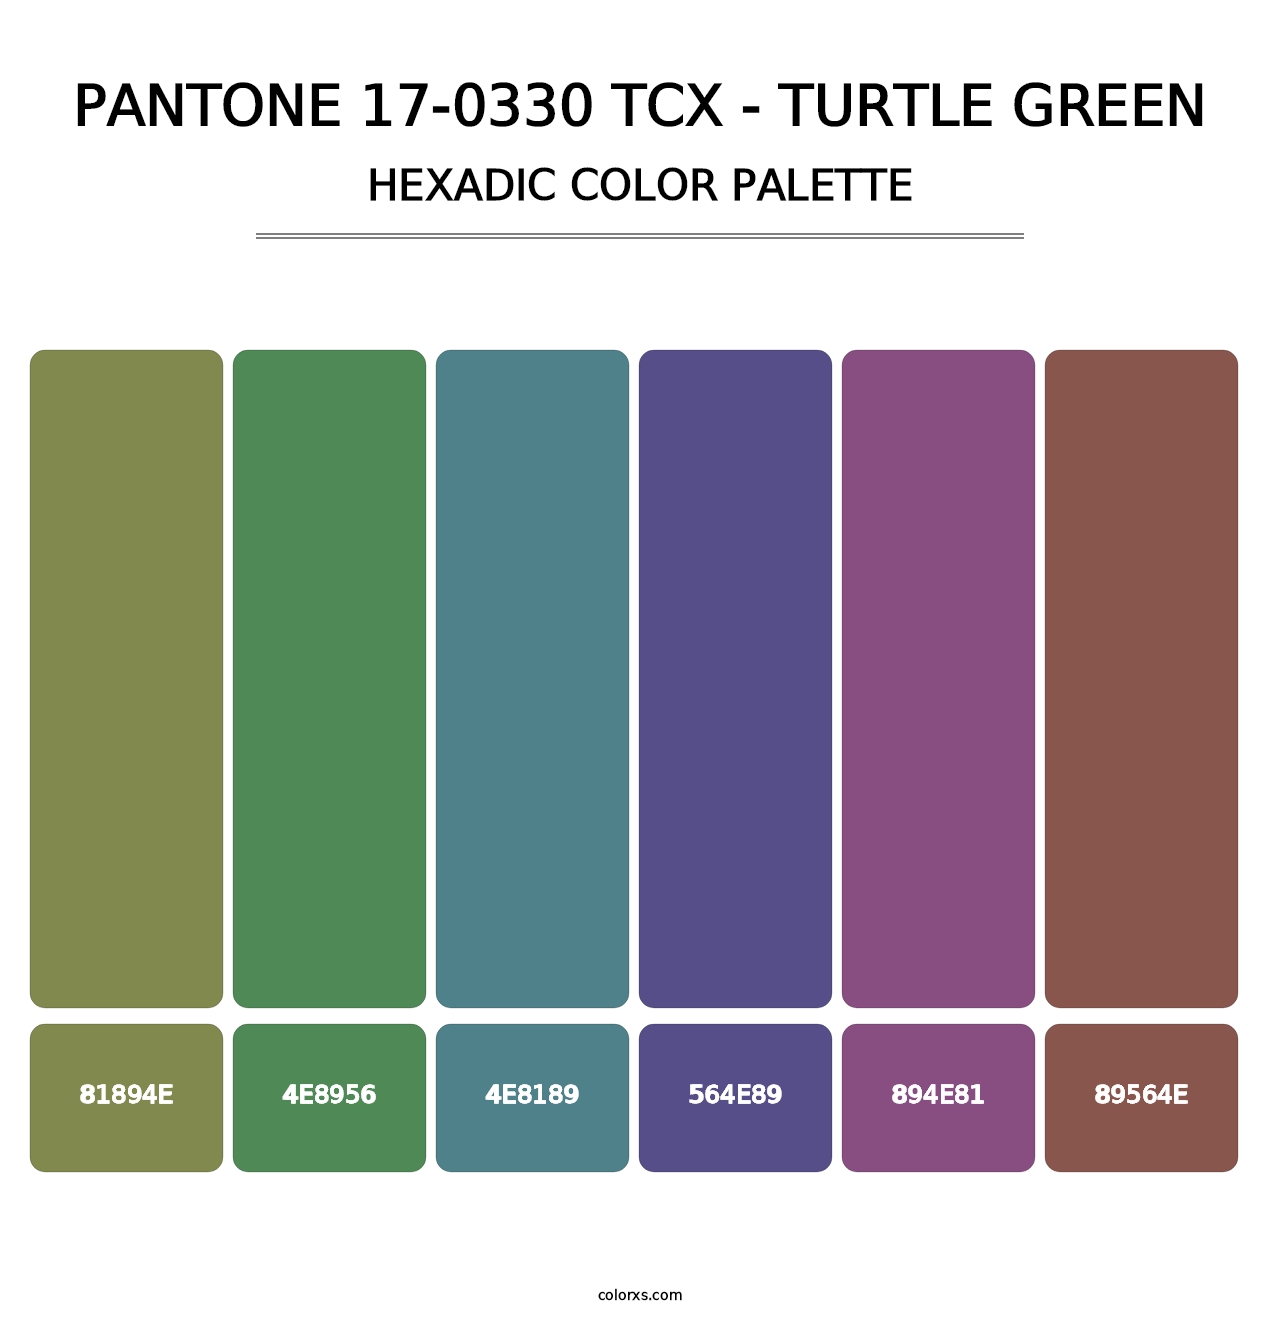 PANTONE 17-0330 TCX - Turtle Green - Hexadic Color Palette